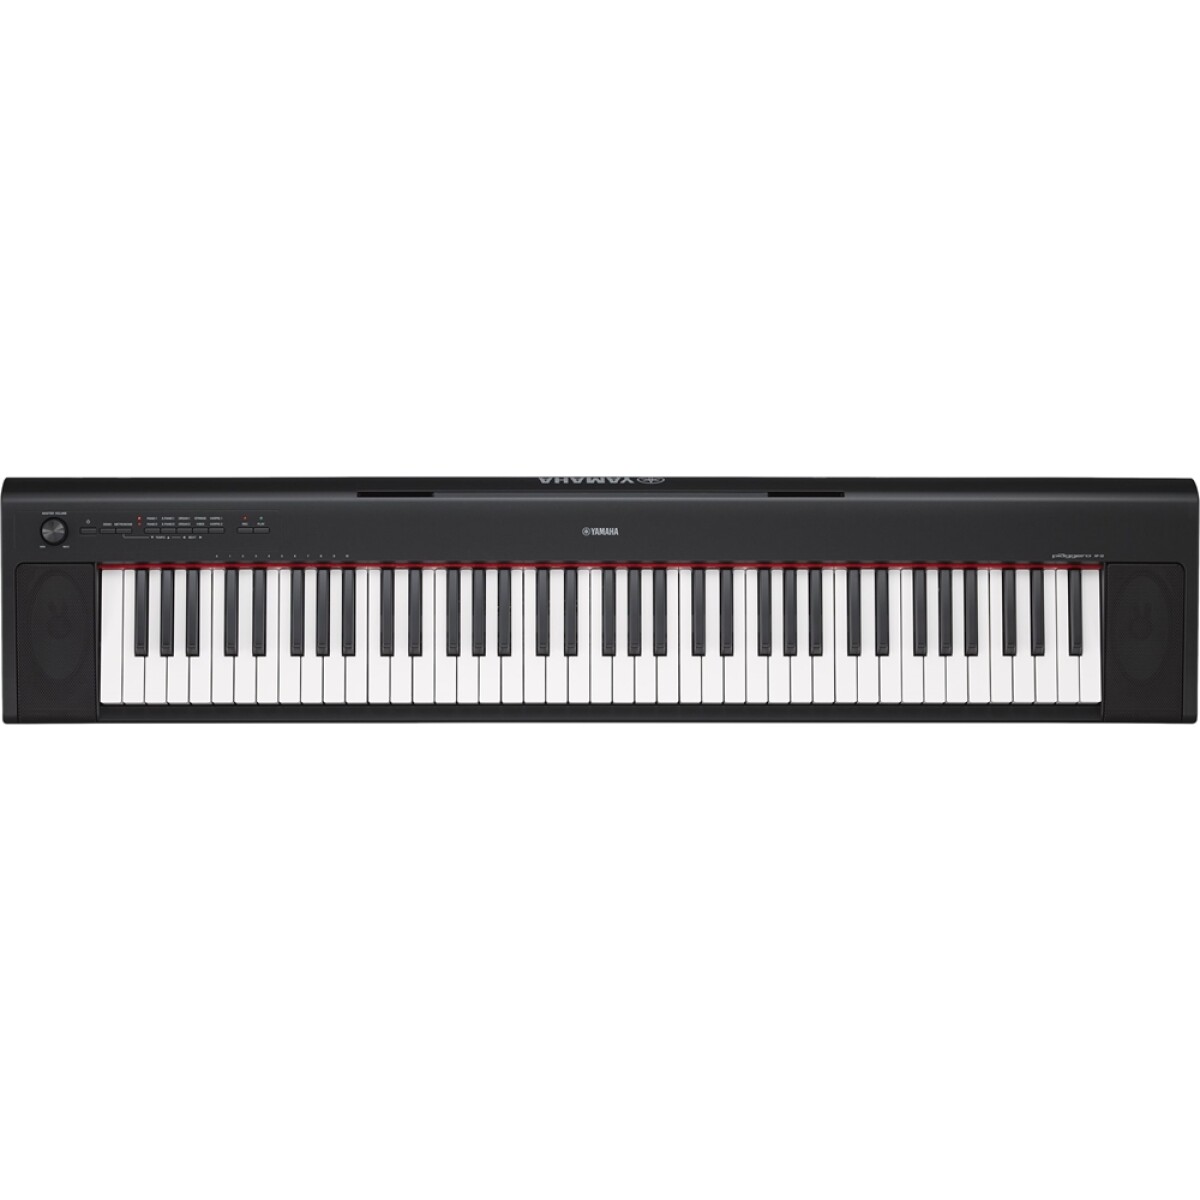 Piano Digital Yamaha Np32b Black 